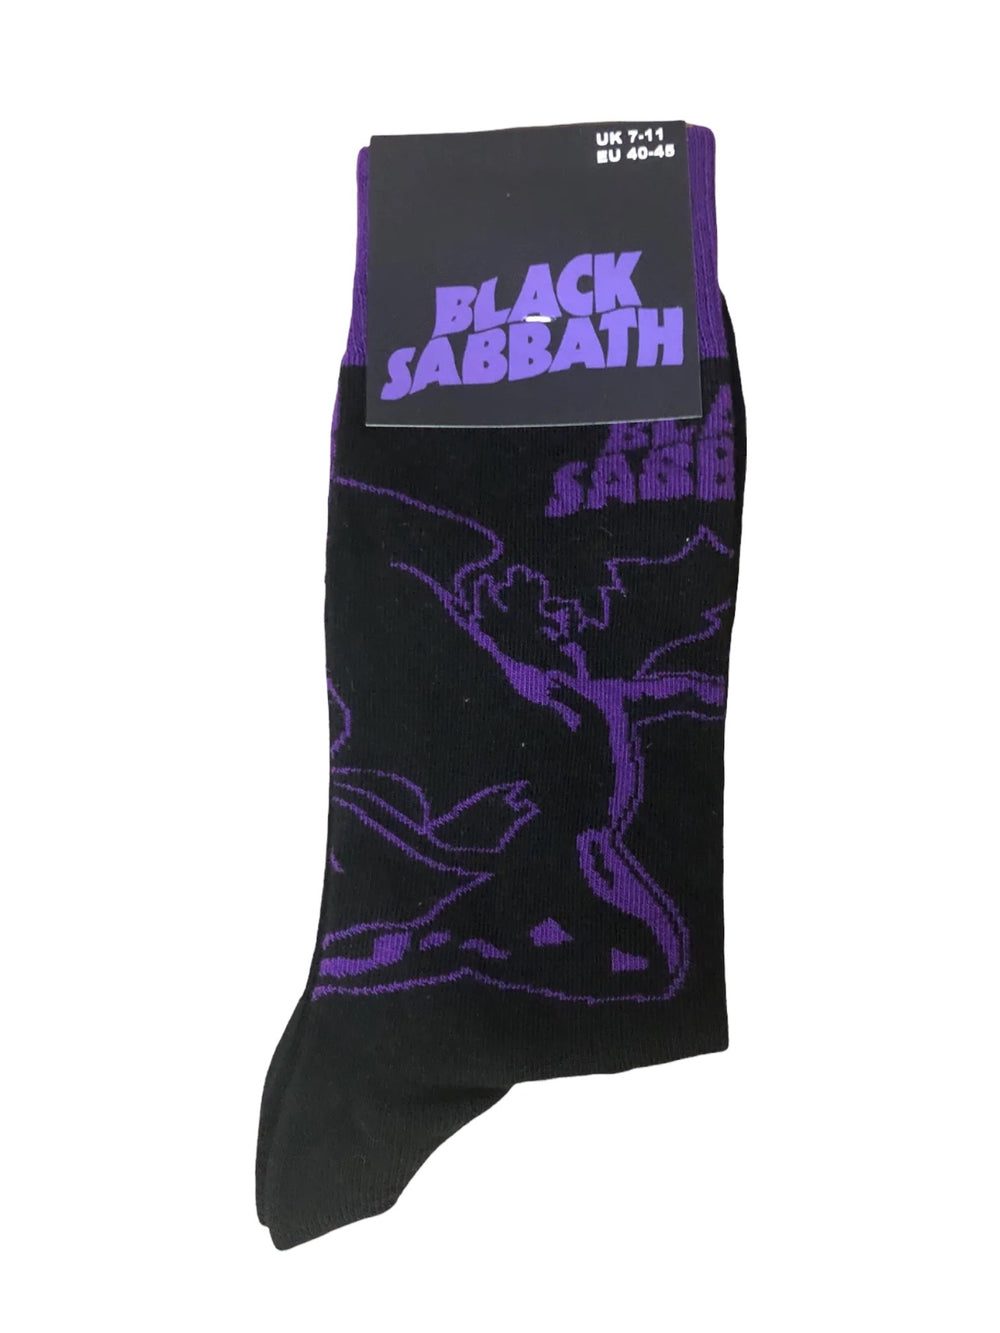 Black Sabbath Logo & Demon Official Product 1 Pair Jacquard Socks Brand New